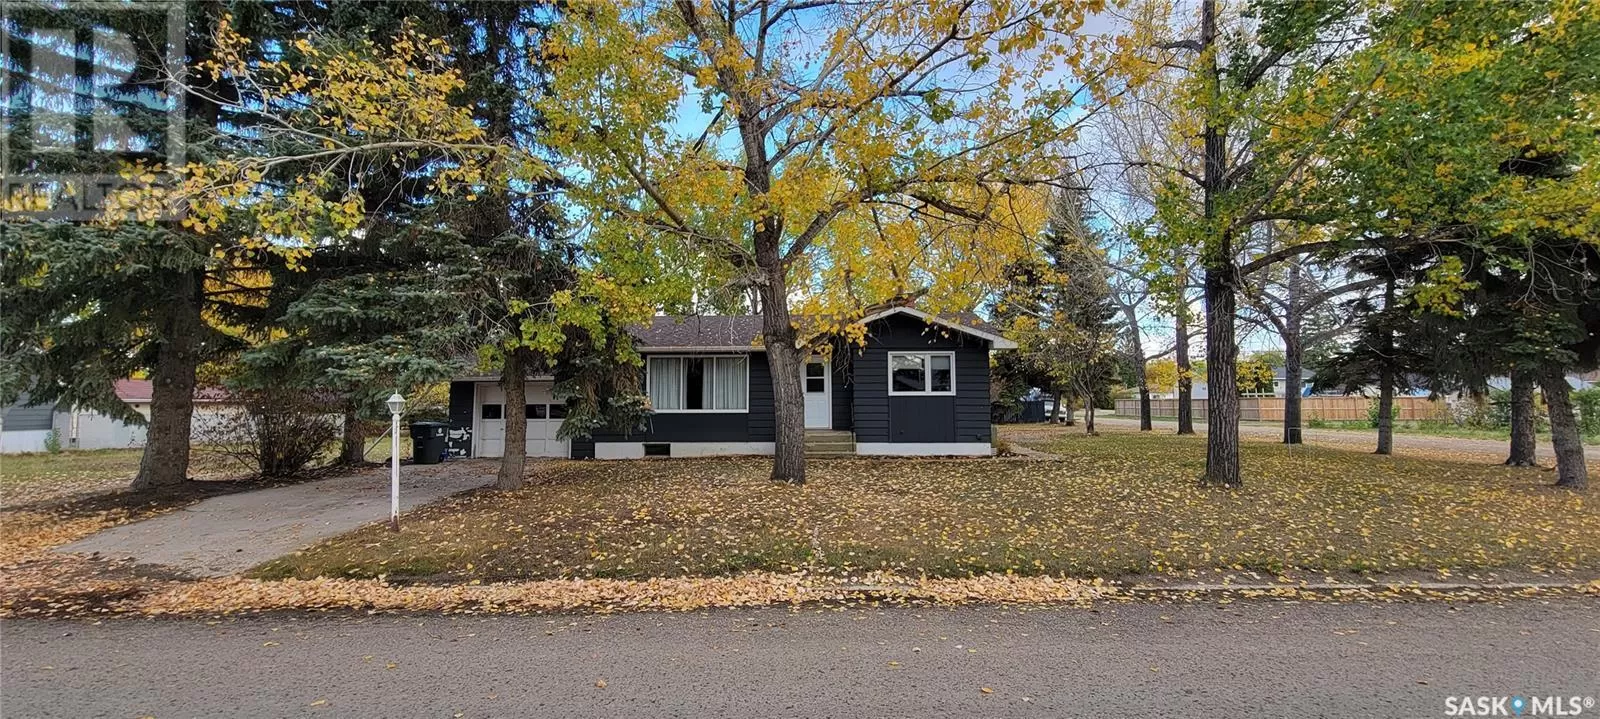 House for rent: 500 Broad Street, Cut Knife, Saskatchewan S0M 0N0